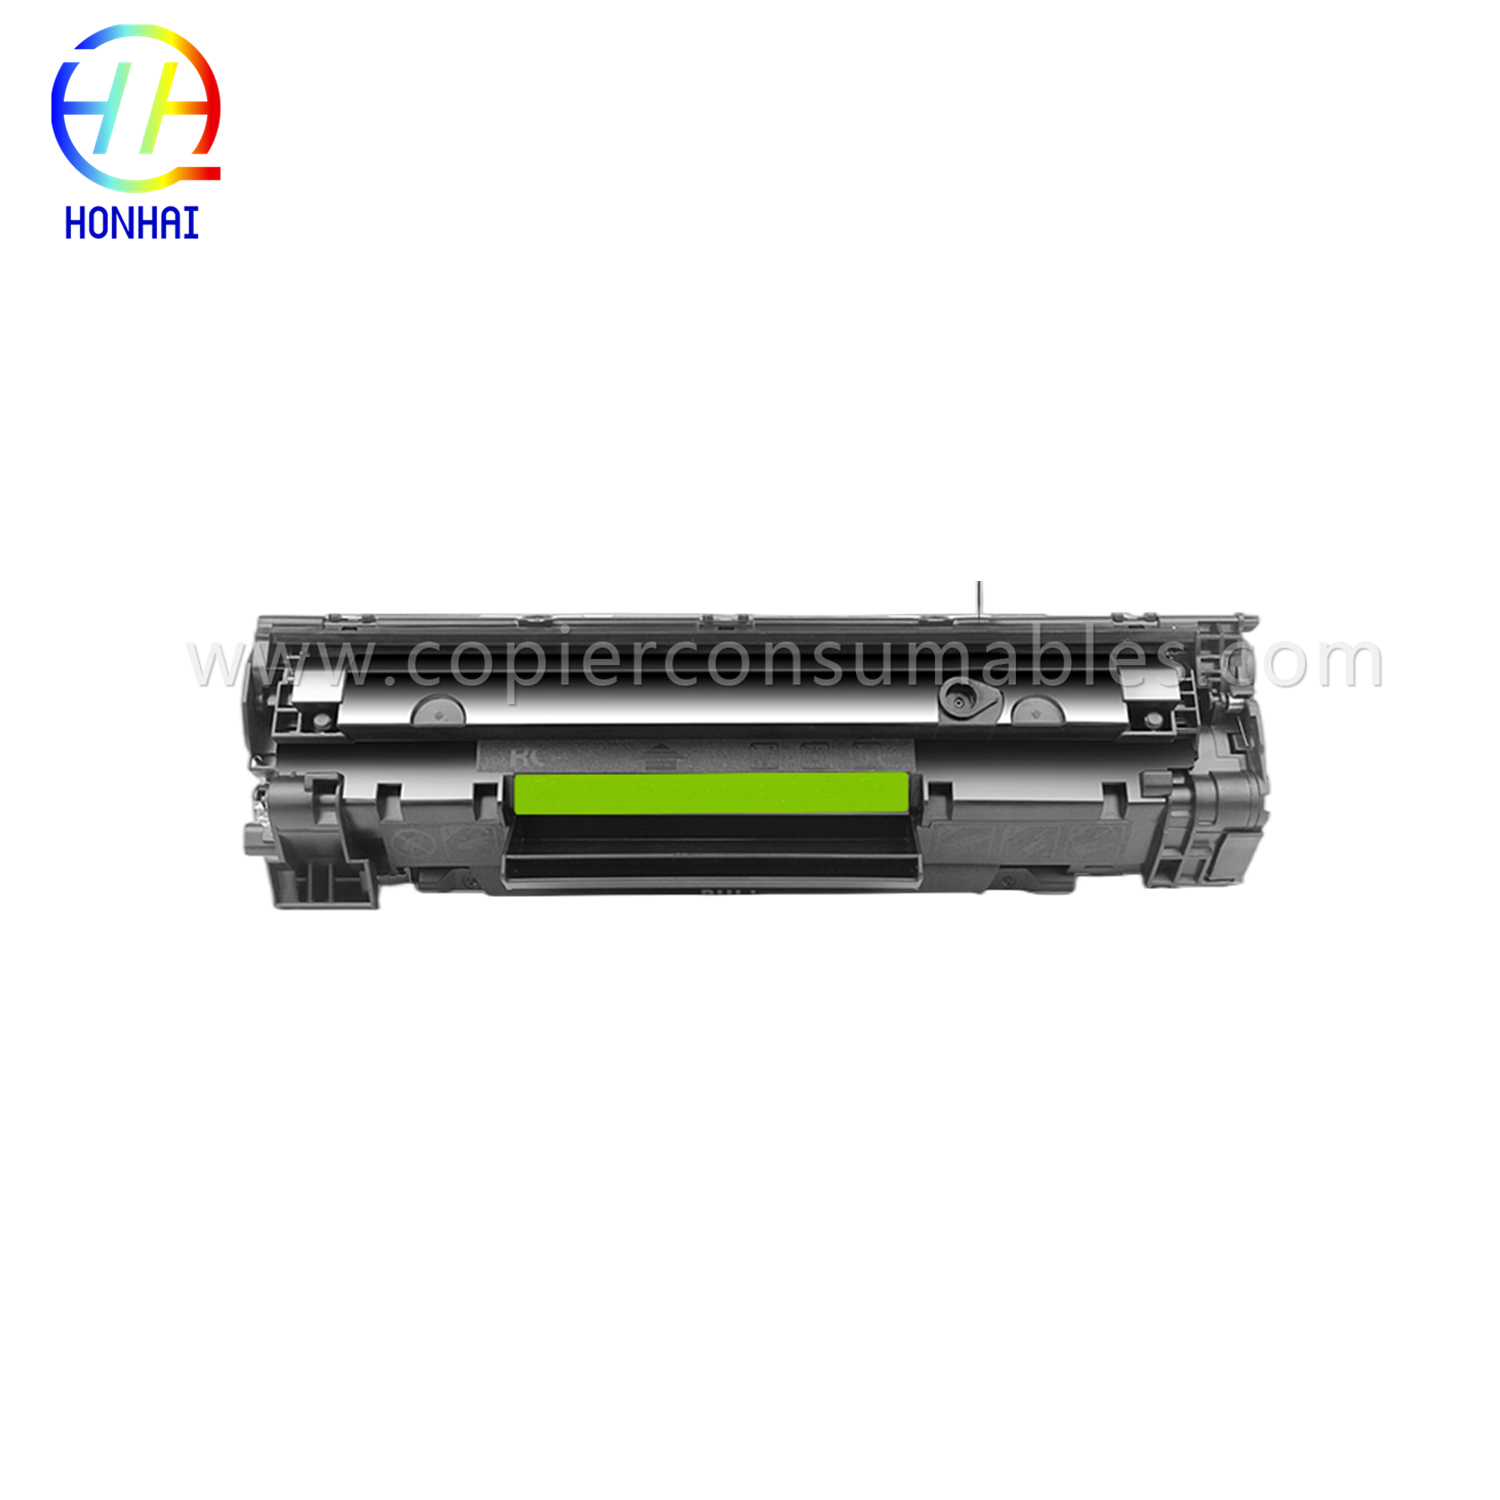 https://www.copierhonhaitech.com/toner-cartridge-kuri-hp-laserjet-p1005-cb435a-35a-oem-product/